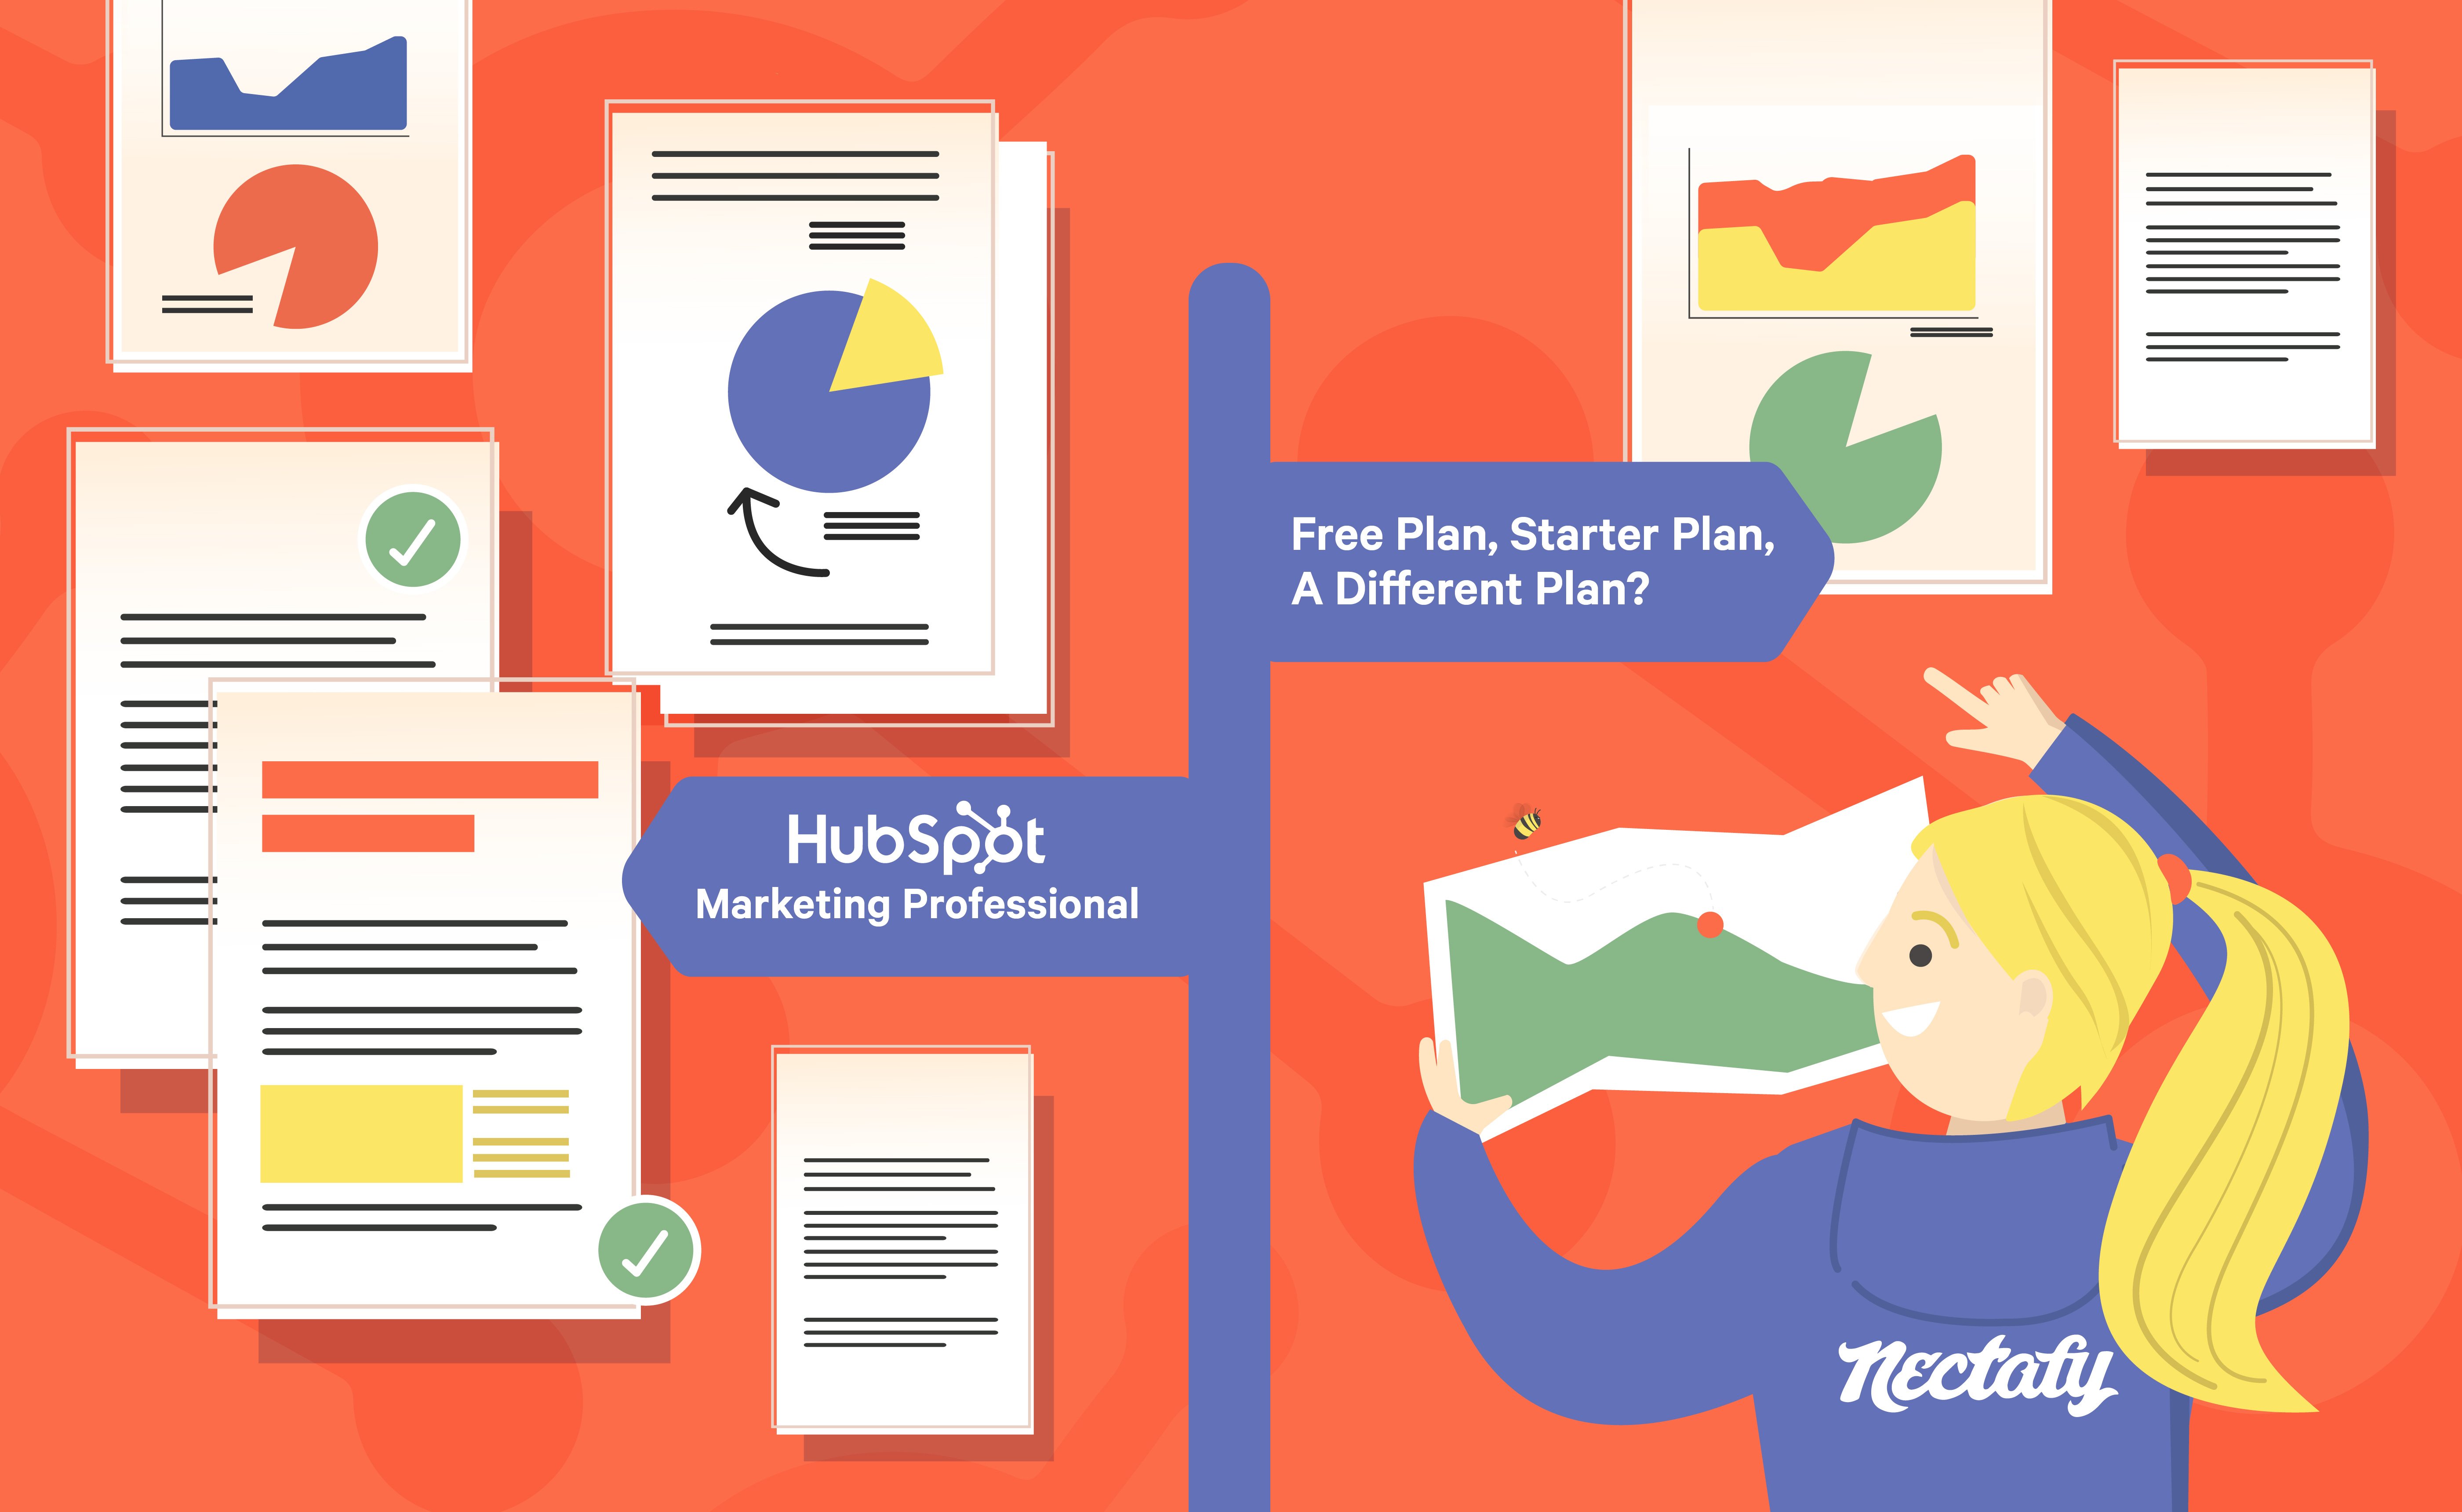 Should You Buy HubSpot Marketing Professional?